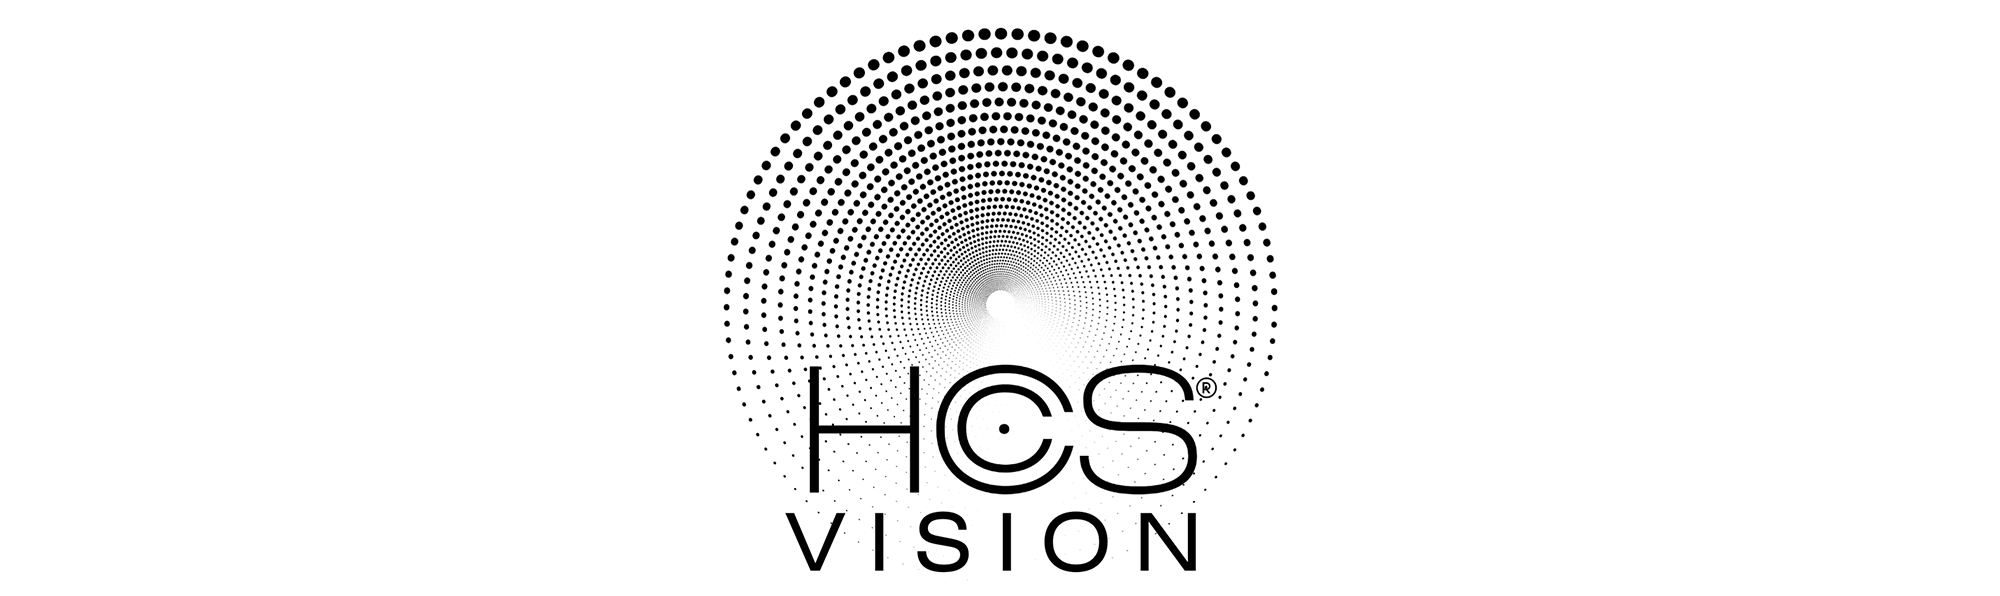 HCSVision_logo_2000x596